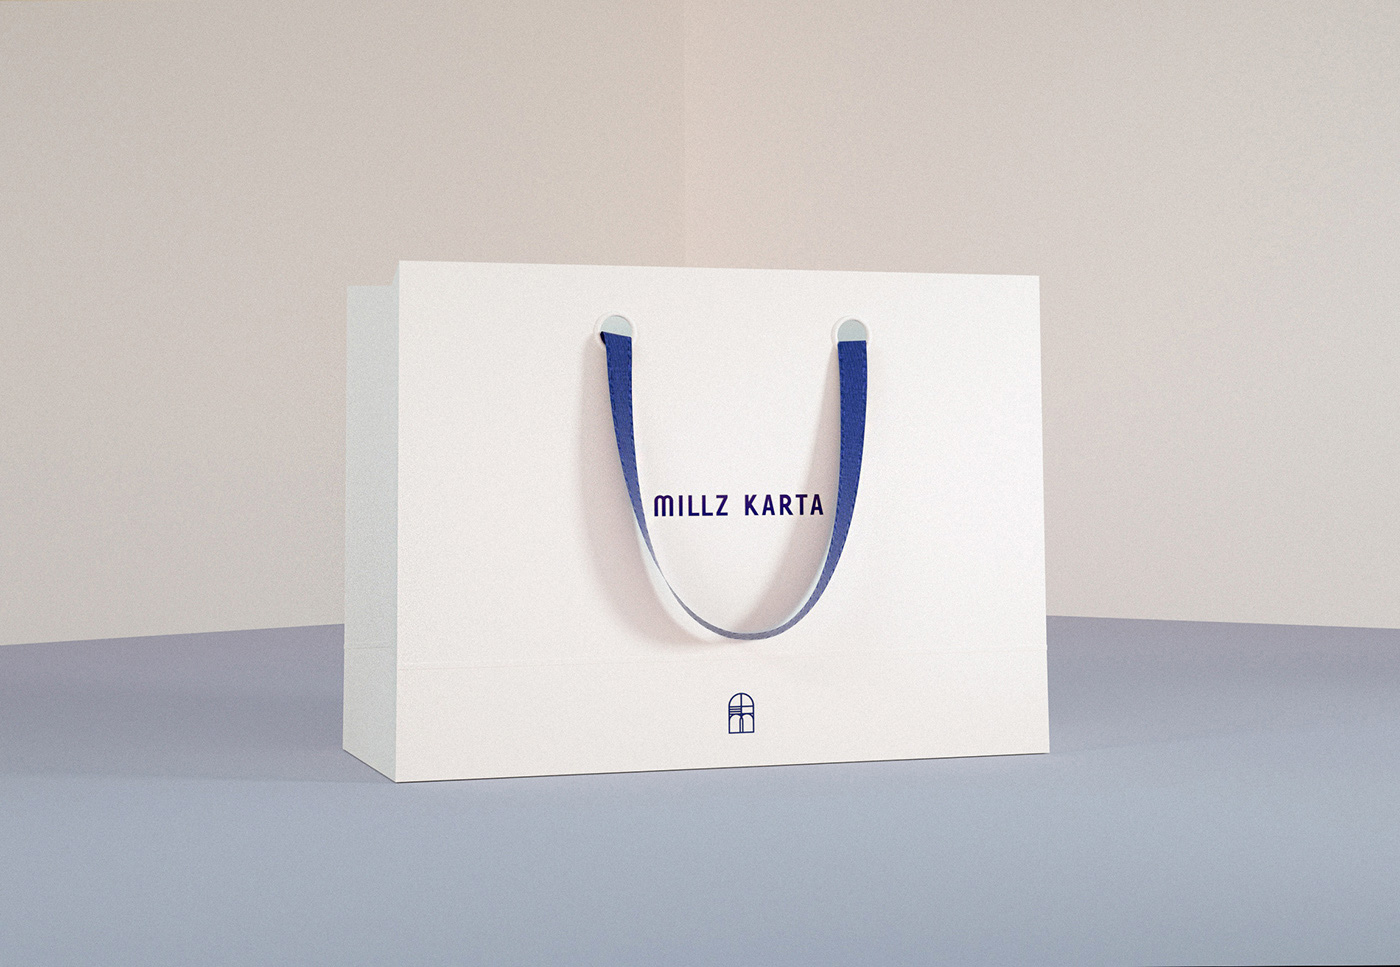 Millz Karta branding by Anastasia Dunaeva